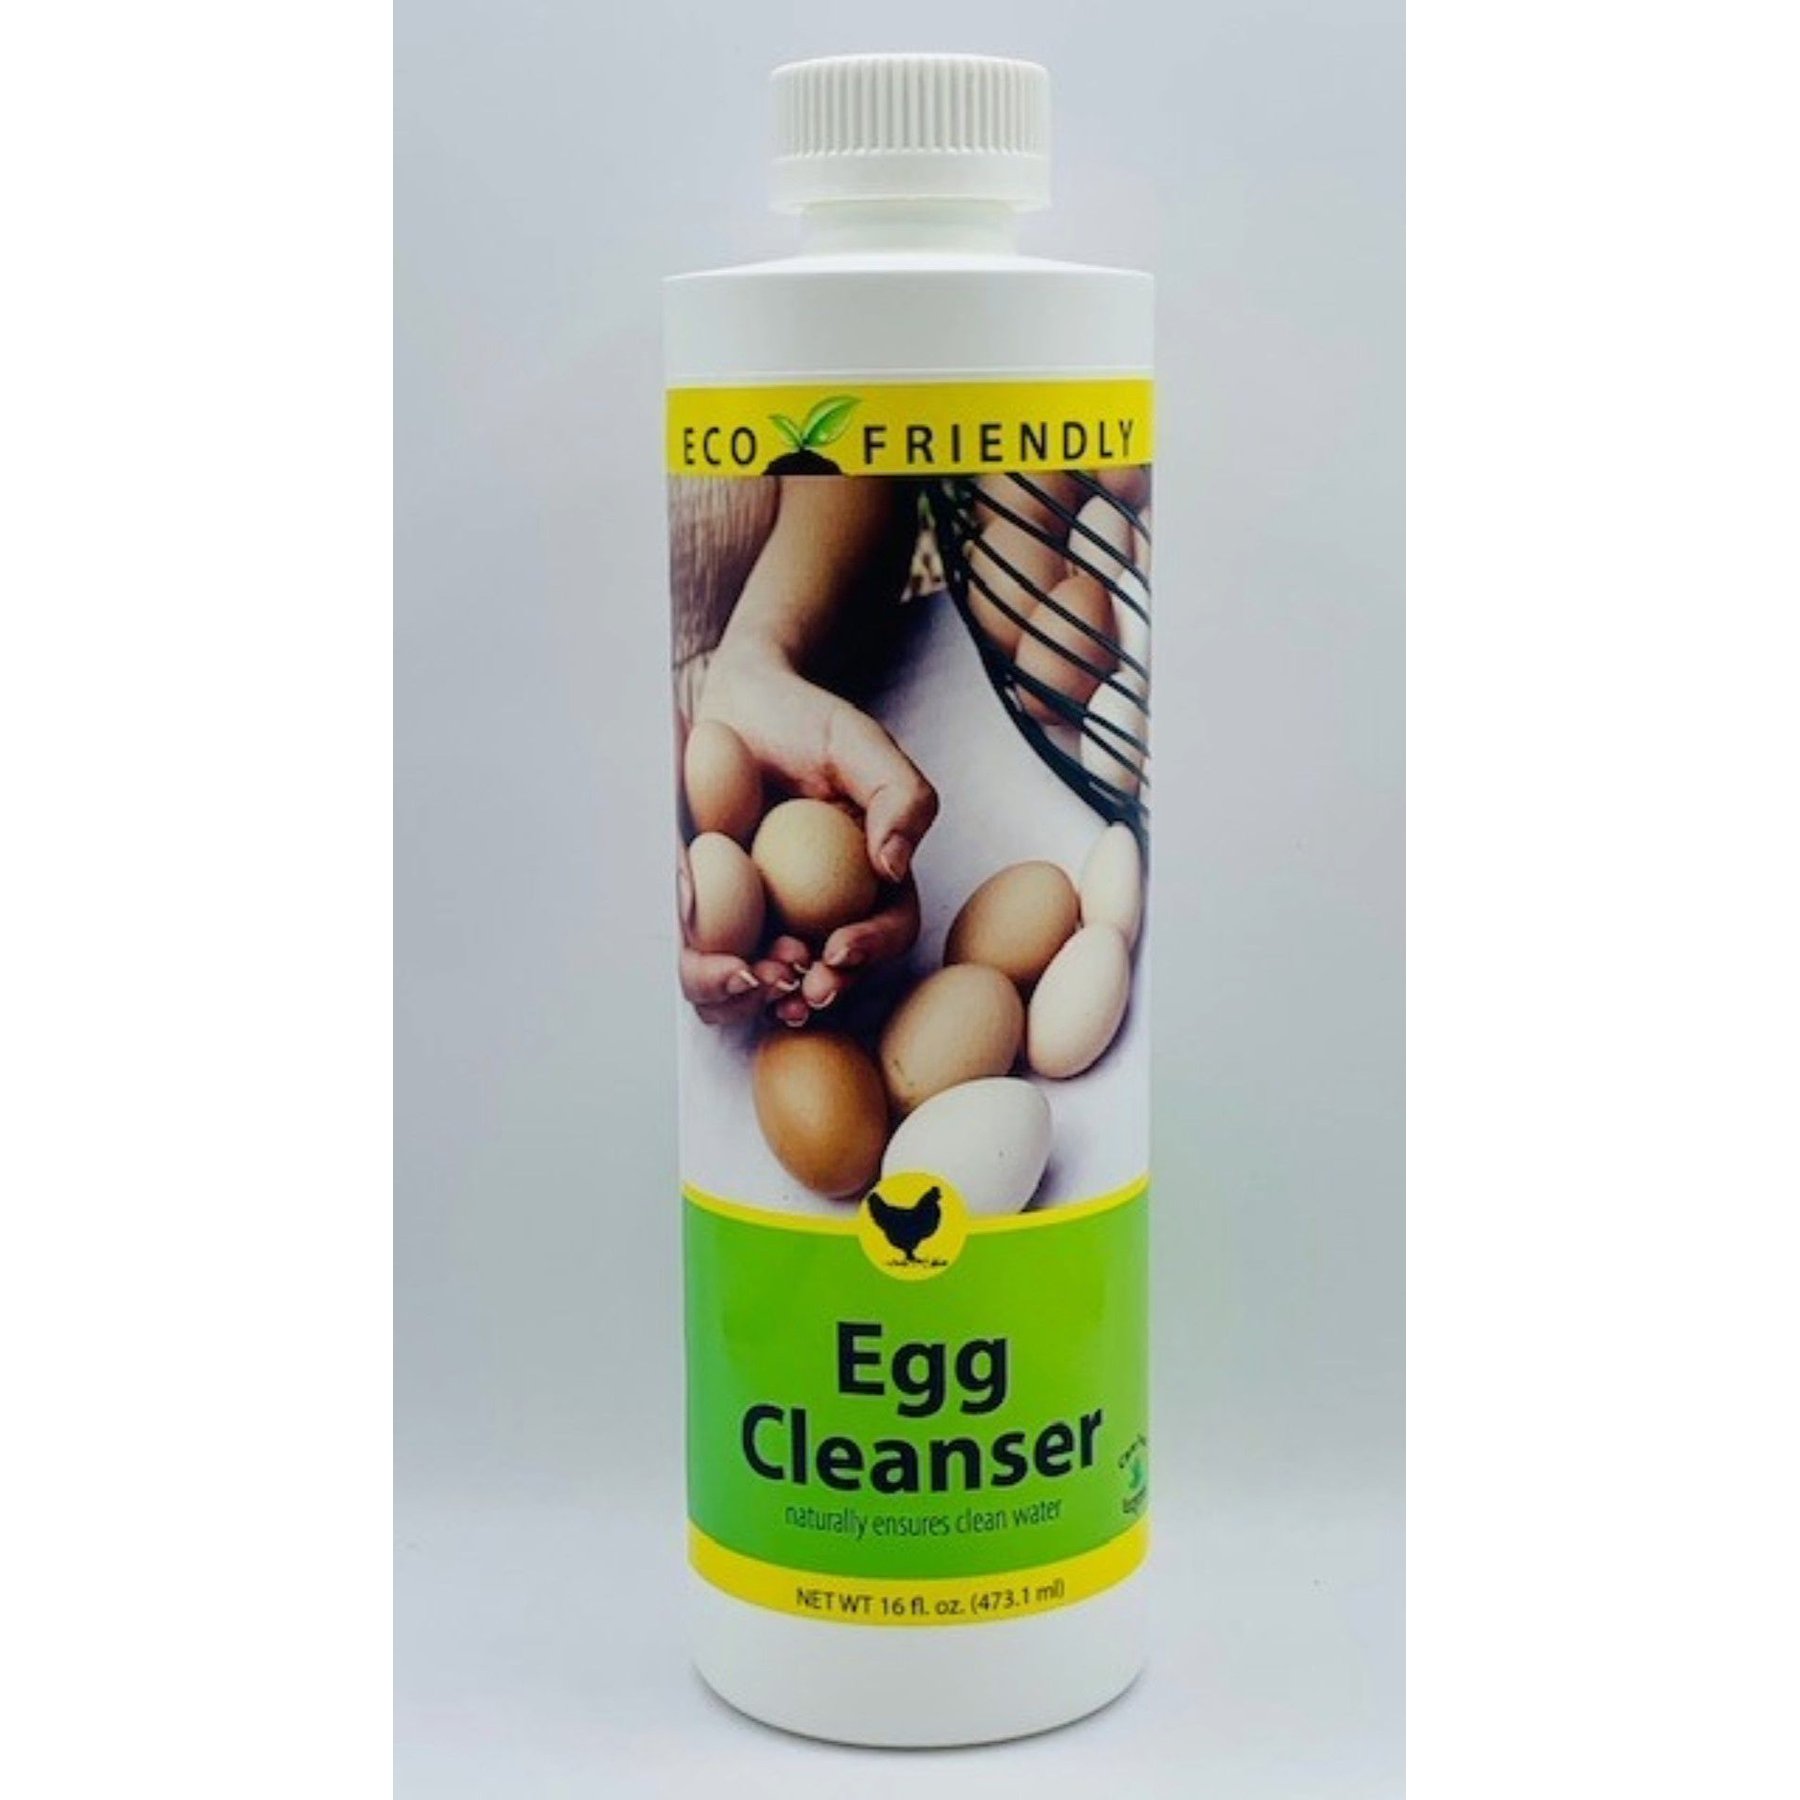 All Natural Egg Cleanser